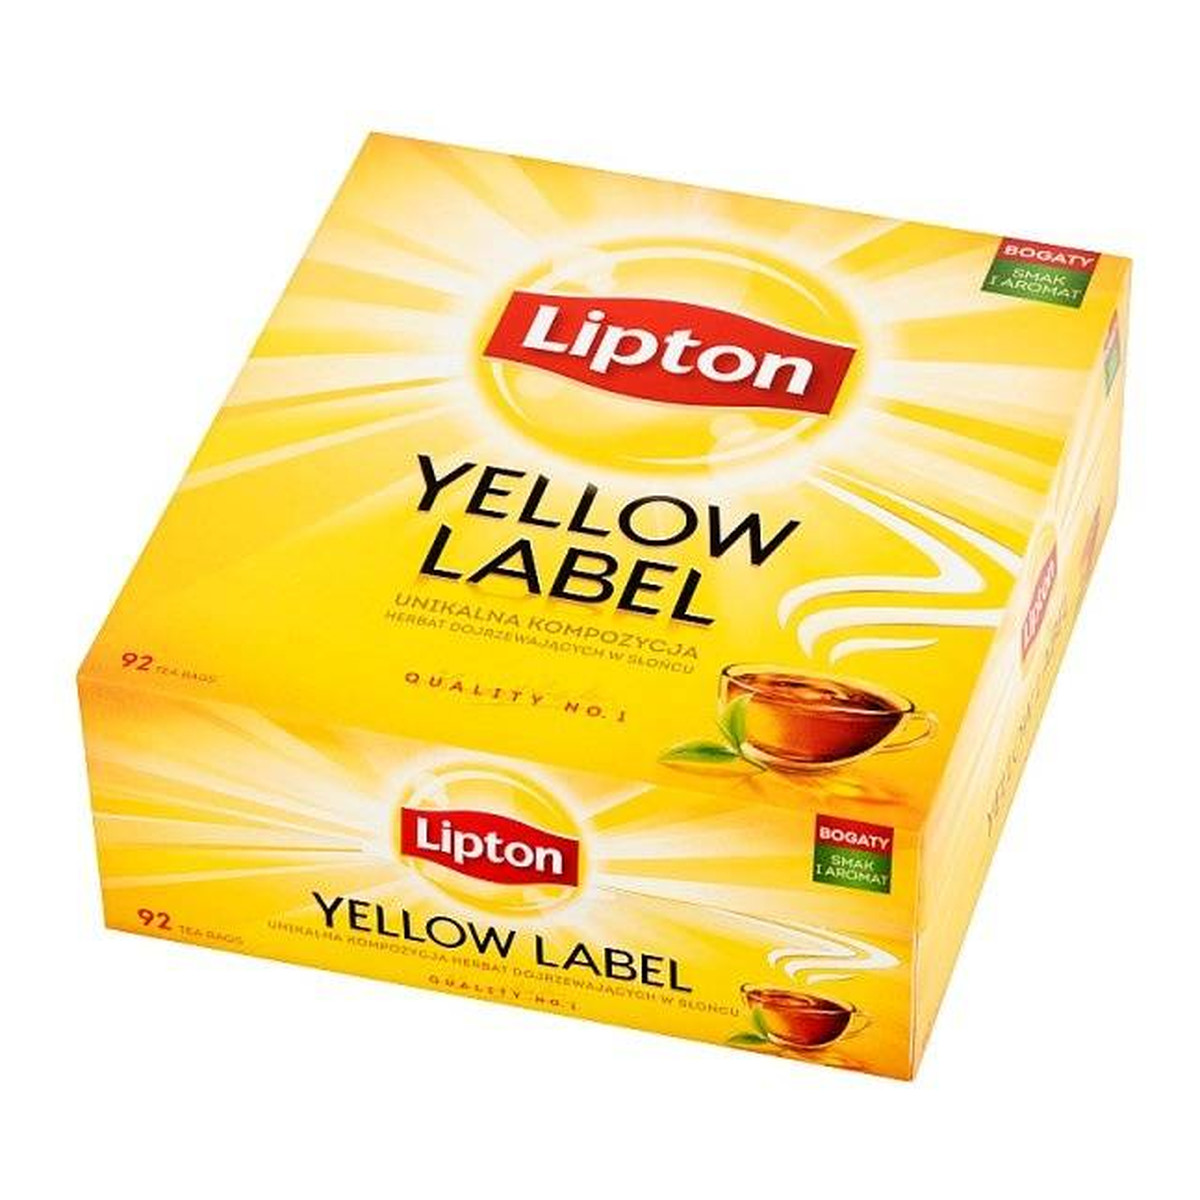 Lipton Yellow Label herbata czarna 92 torebki 184g